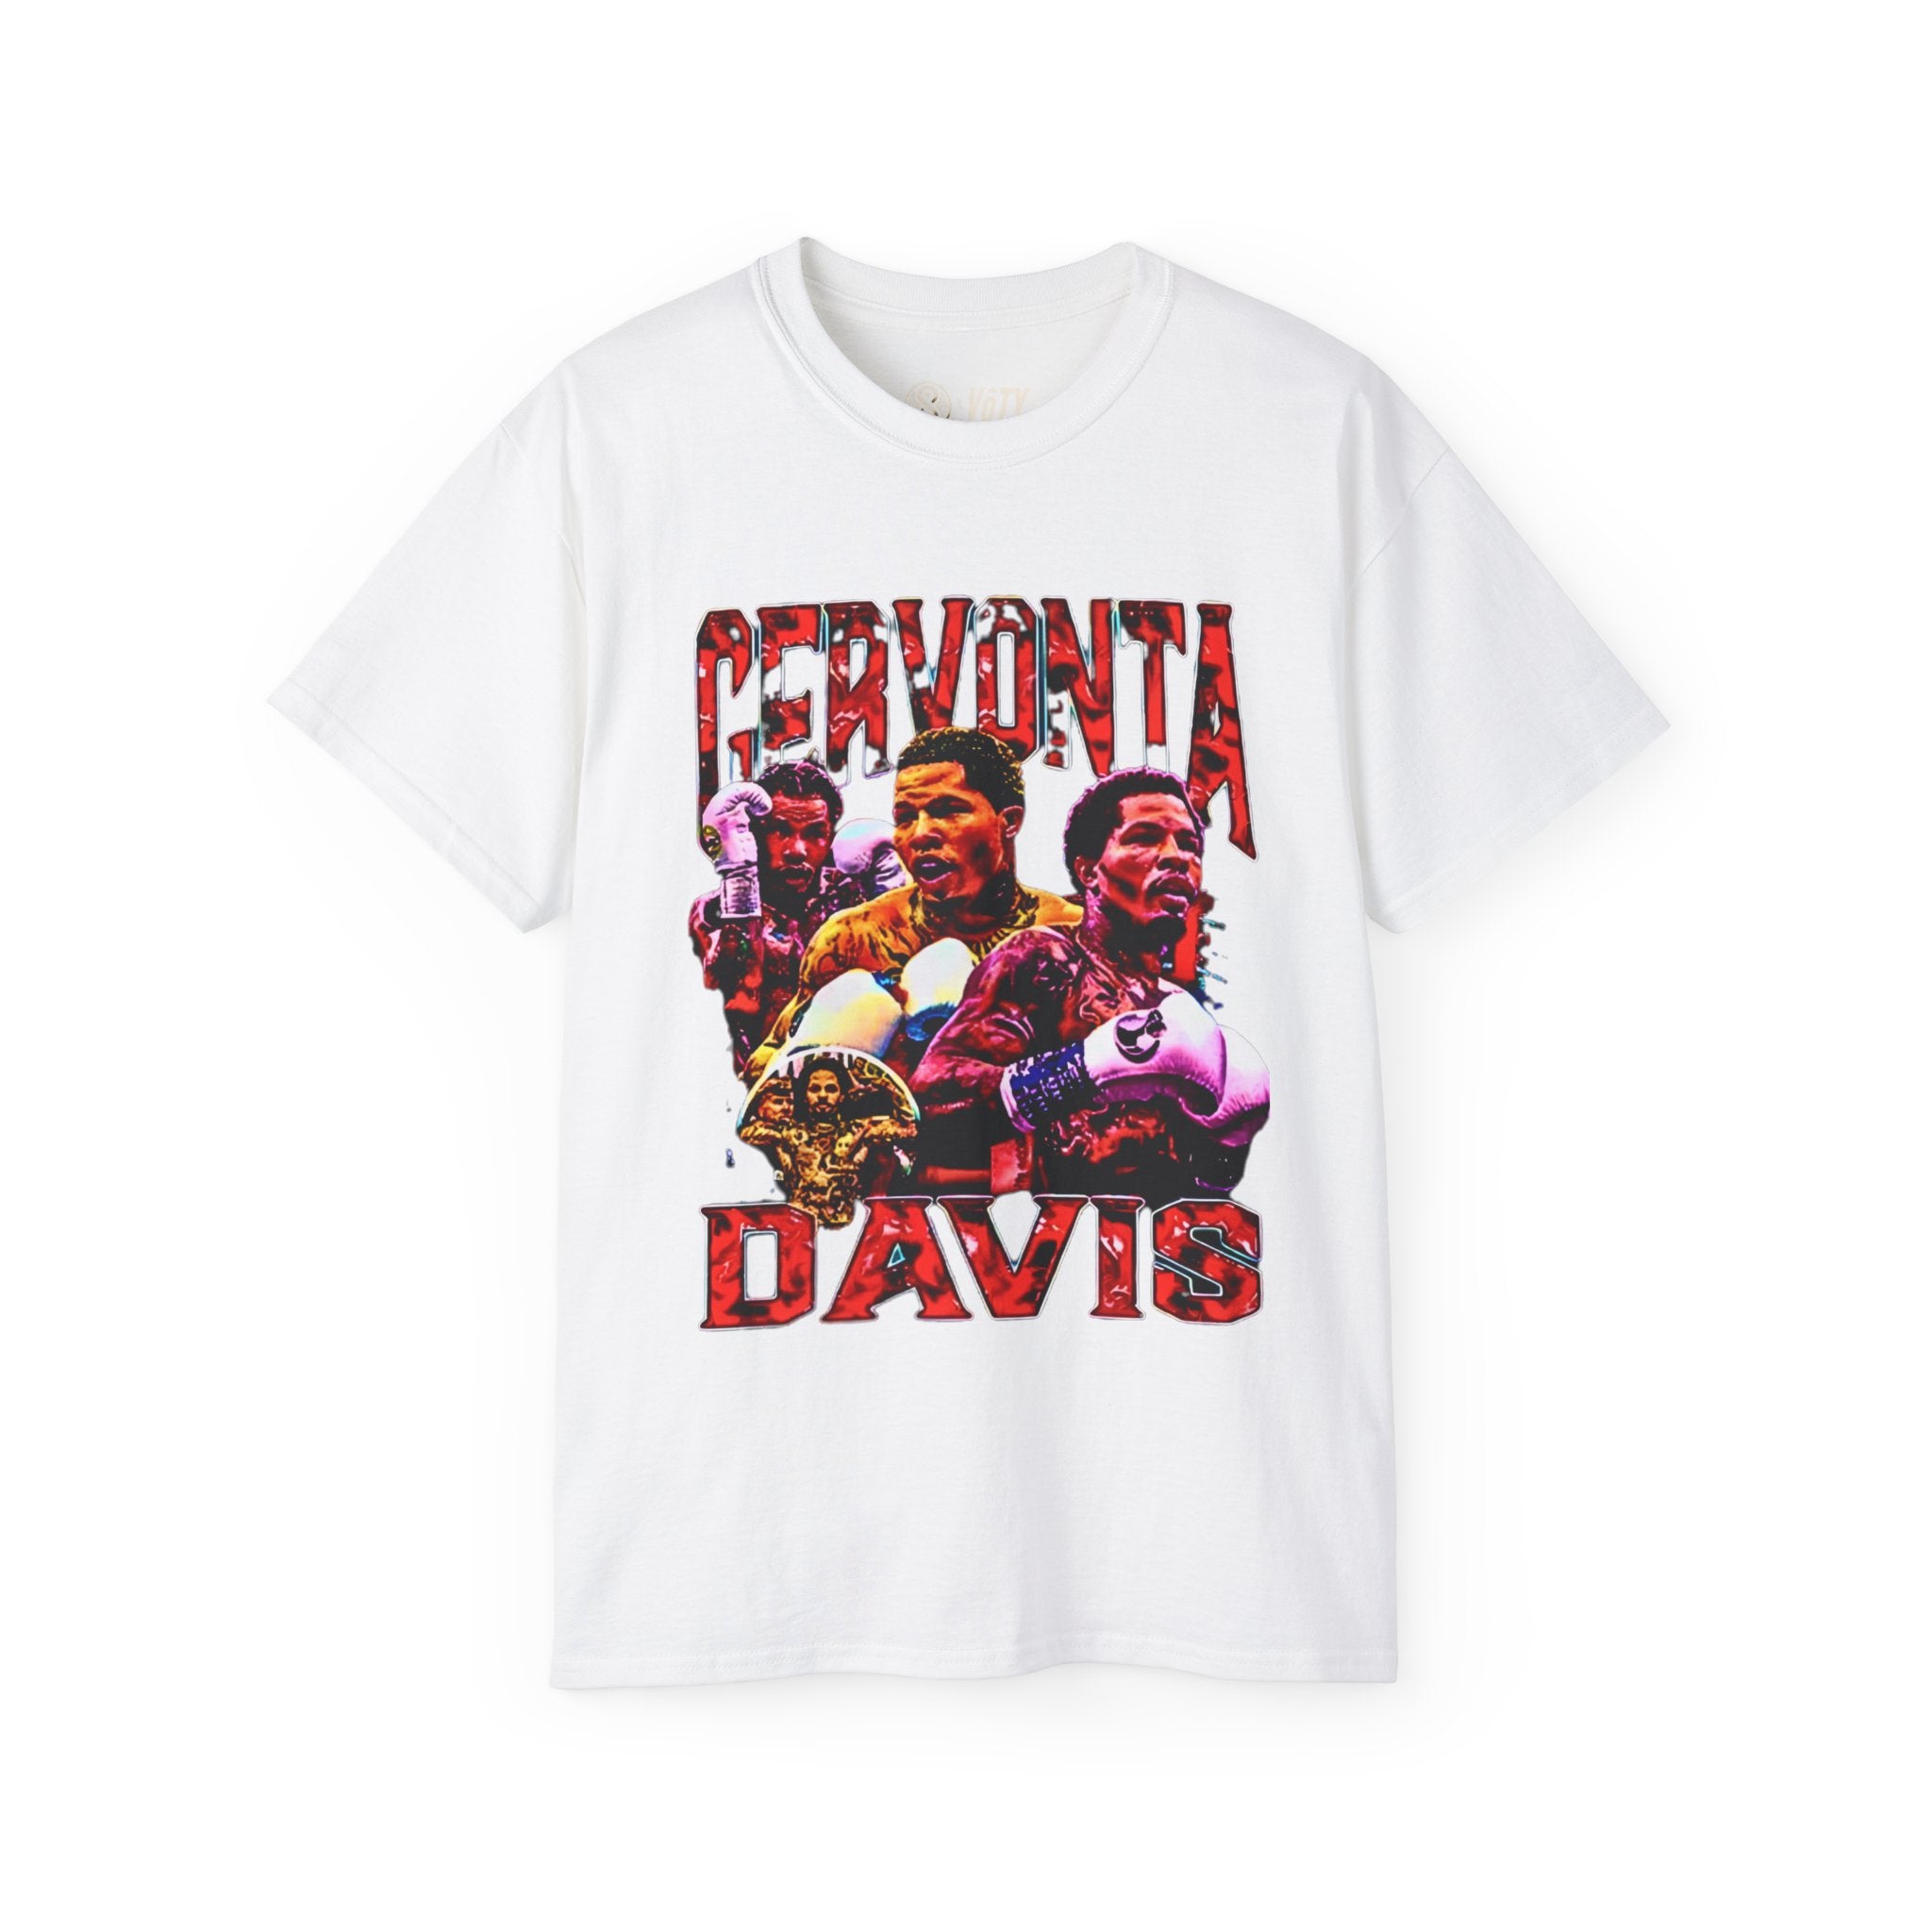 Gervonta Davis T-Shirt